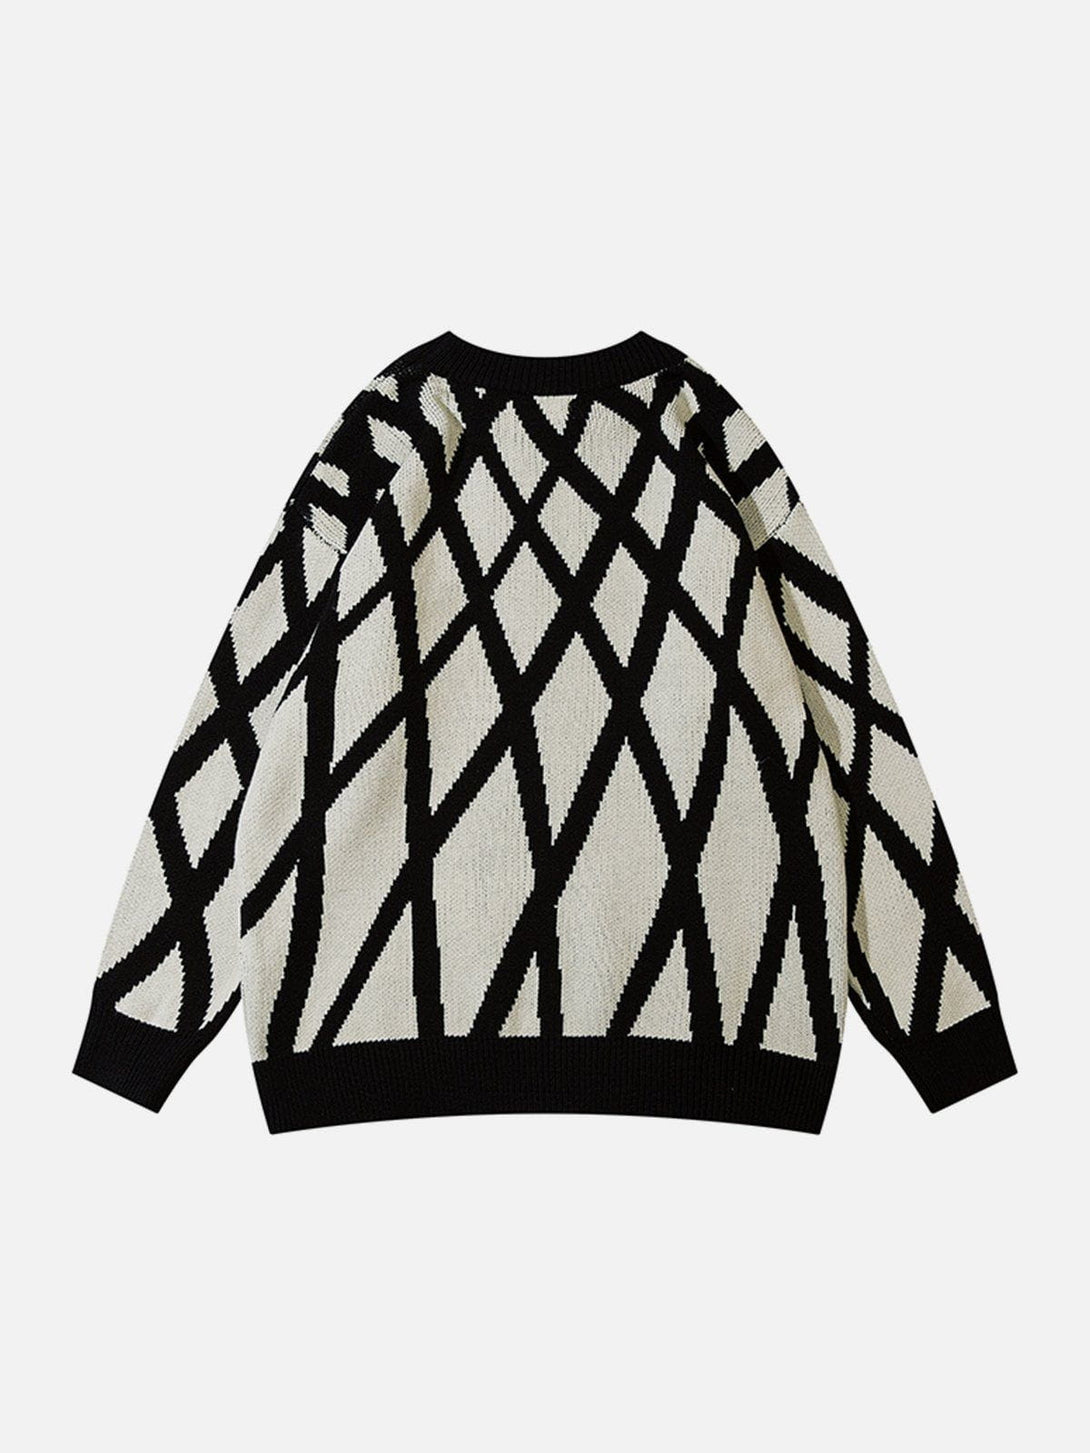 Majesda® - Crossover Mesh Jacquard Knit Sweater outfit ideas streetwear fashion